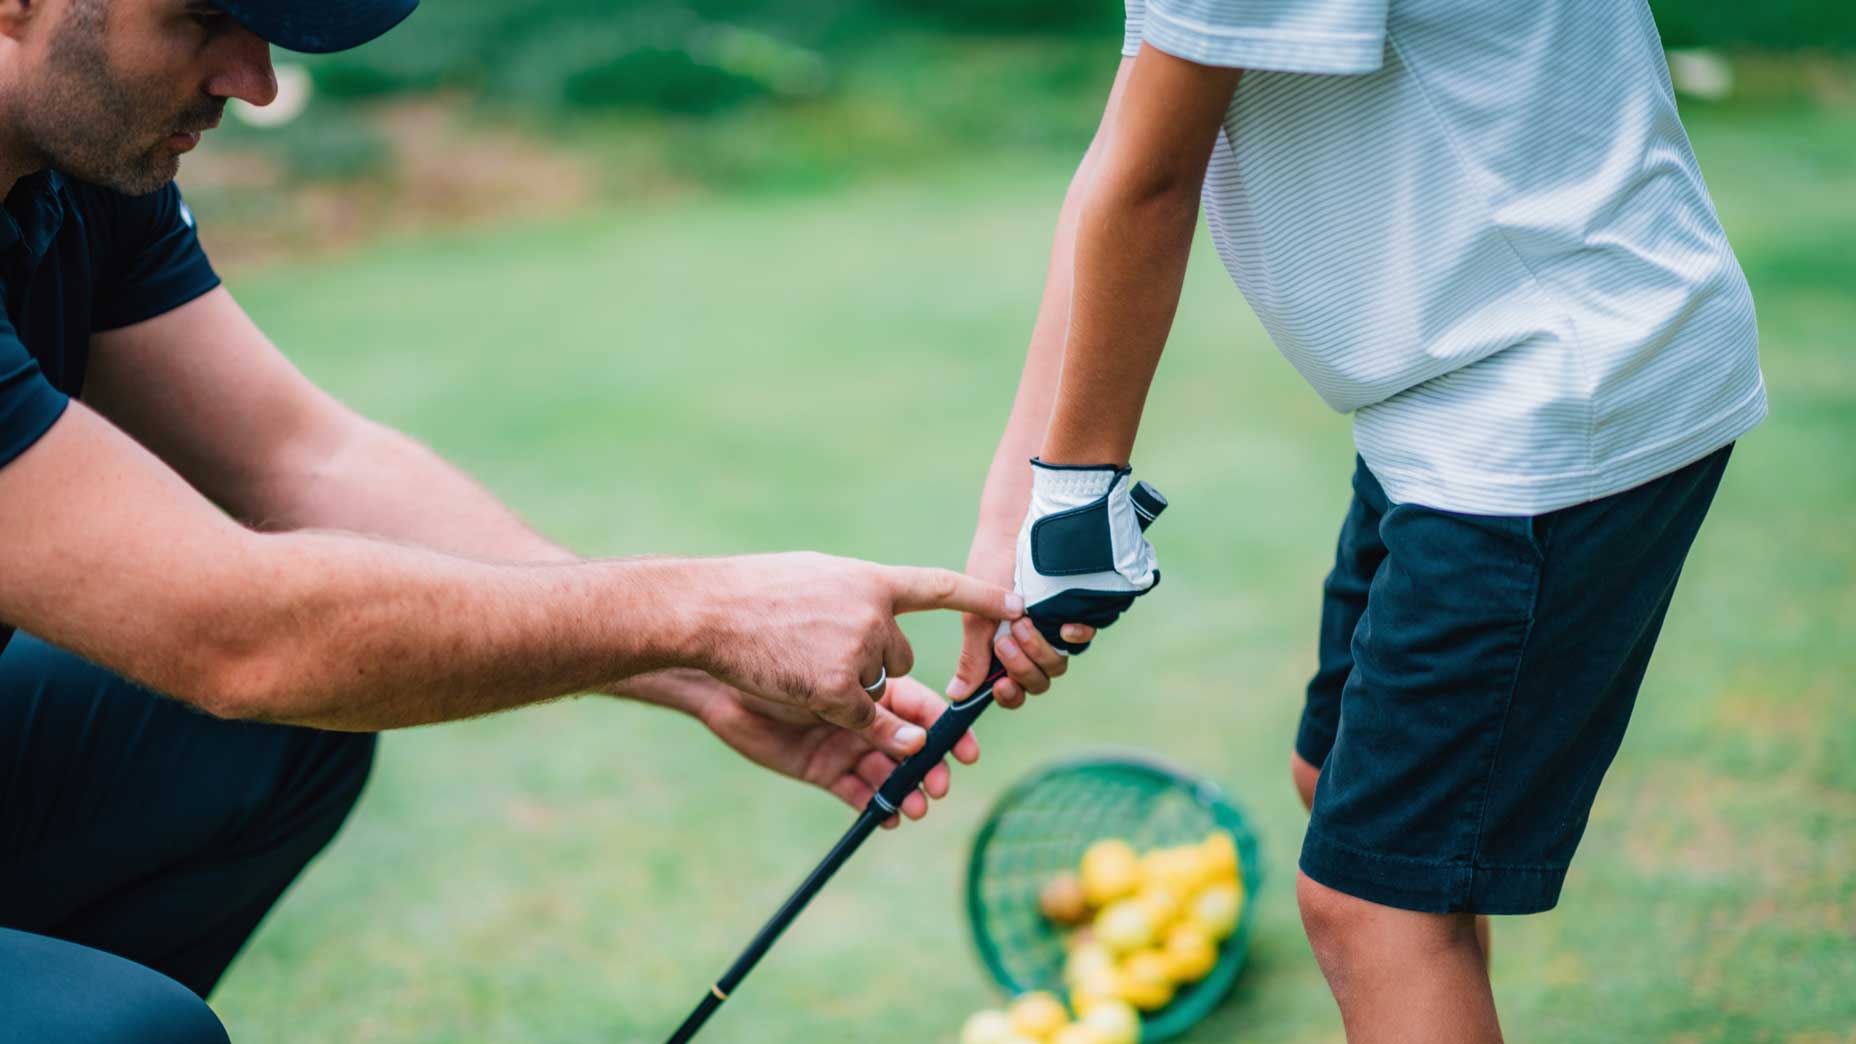 Golf Instructor adjusting young boy’s grip